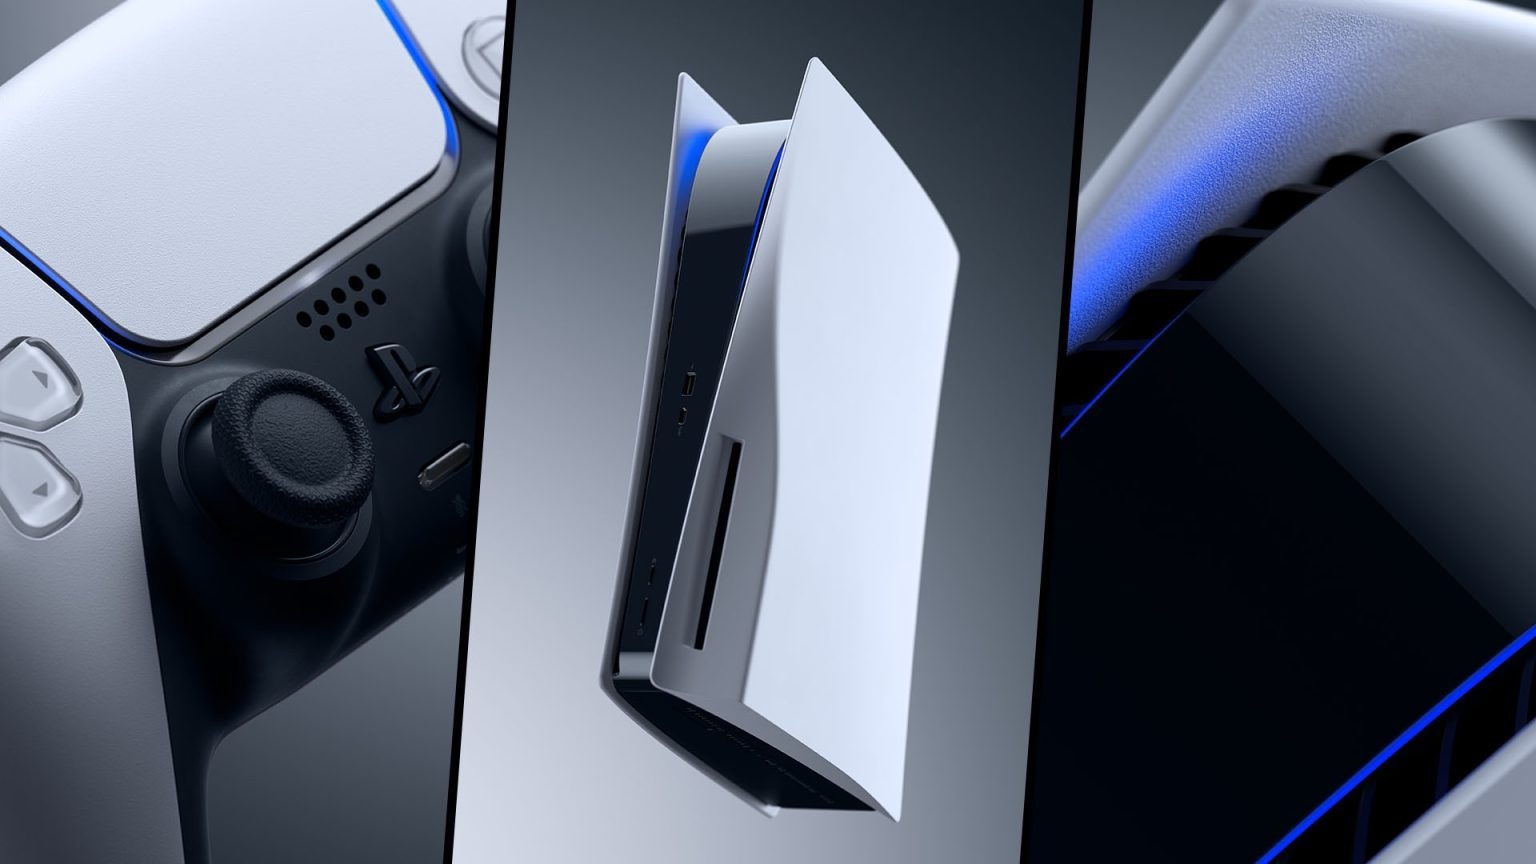 PlayStation Plus apresentou seu novo formato, confirmando rumores